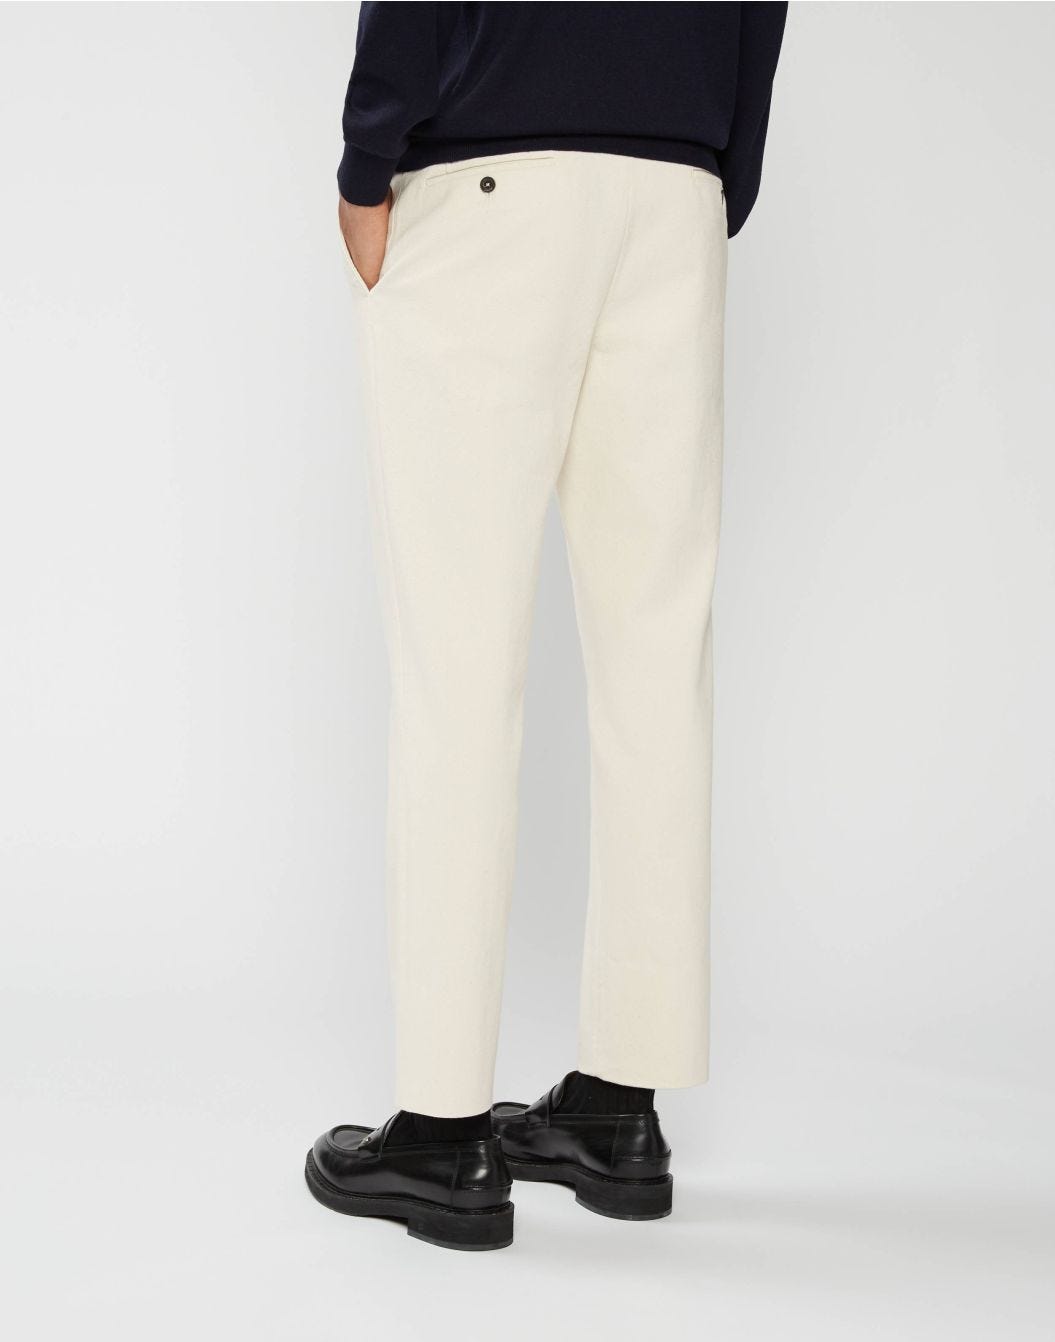 Chino pants in cream-coloured cotton